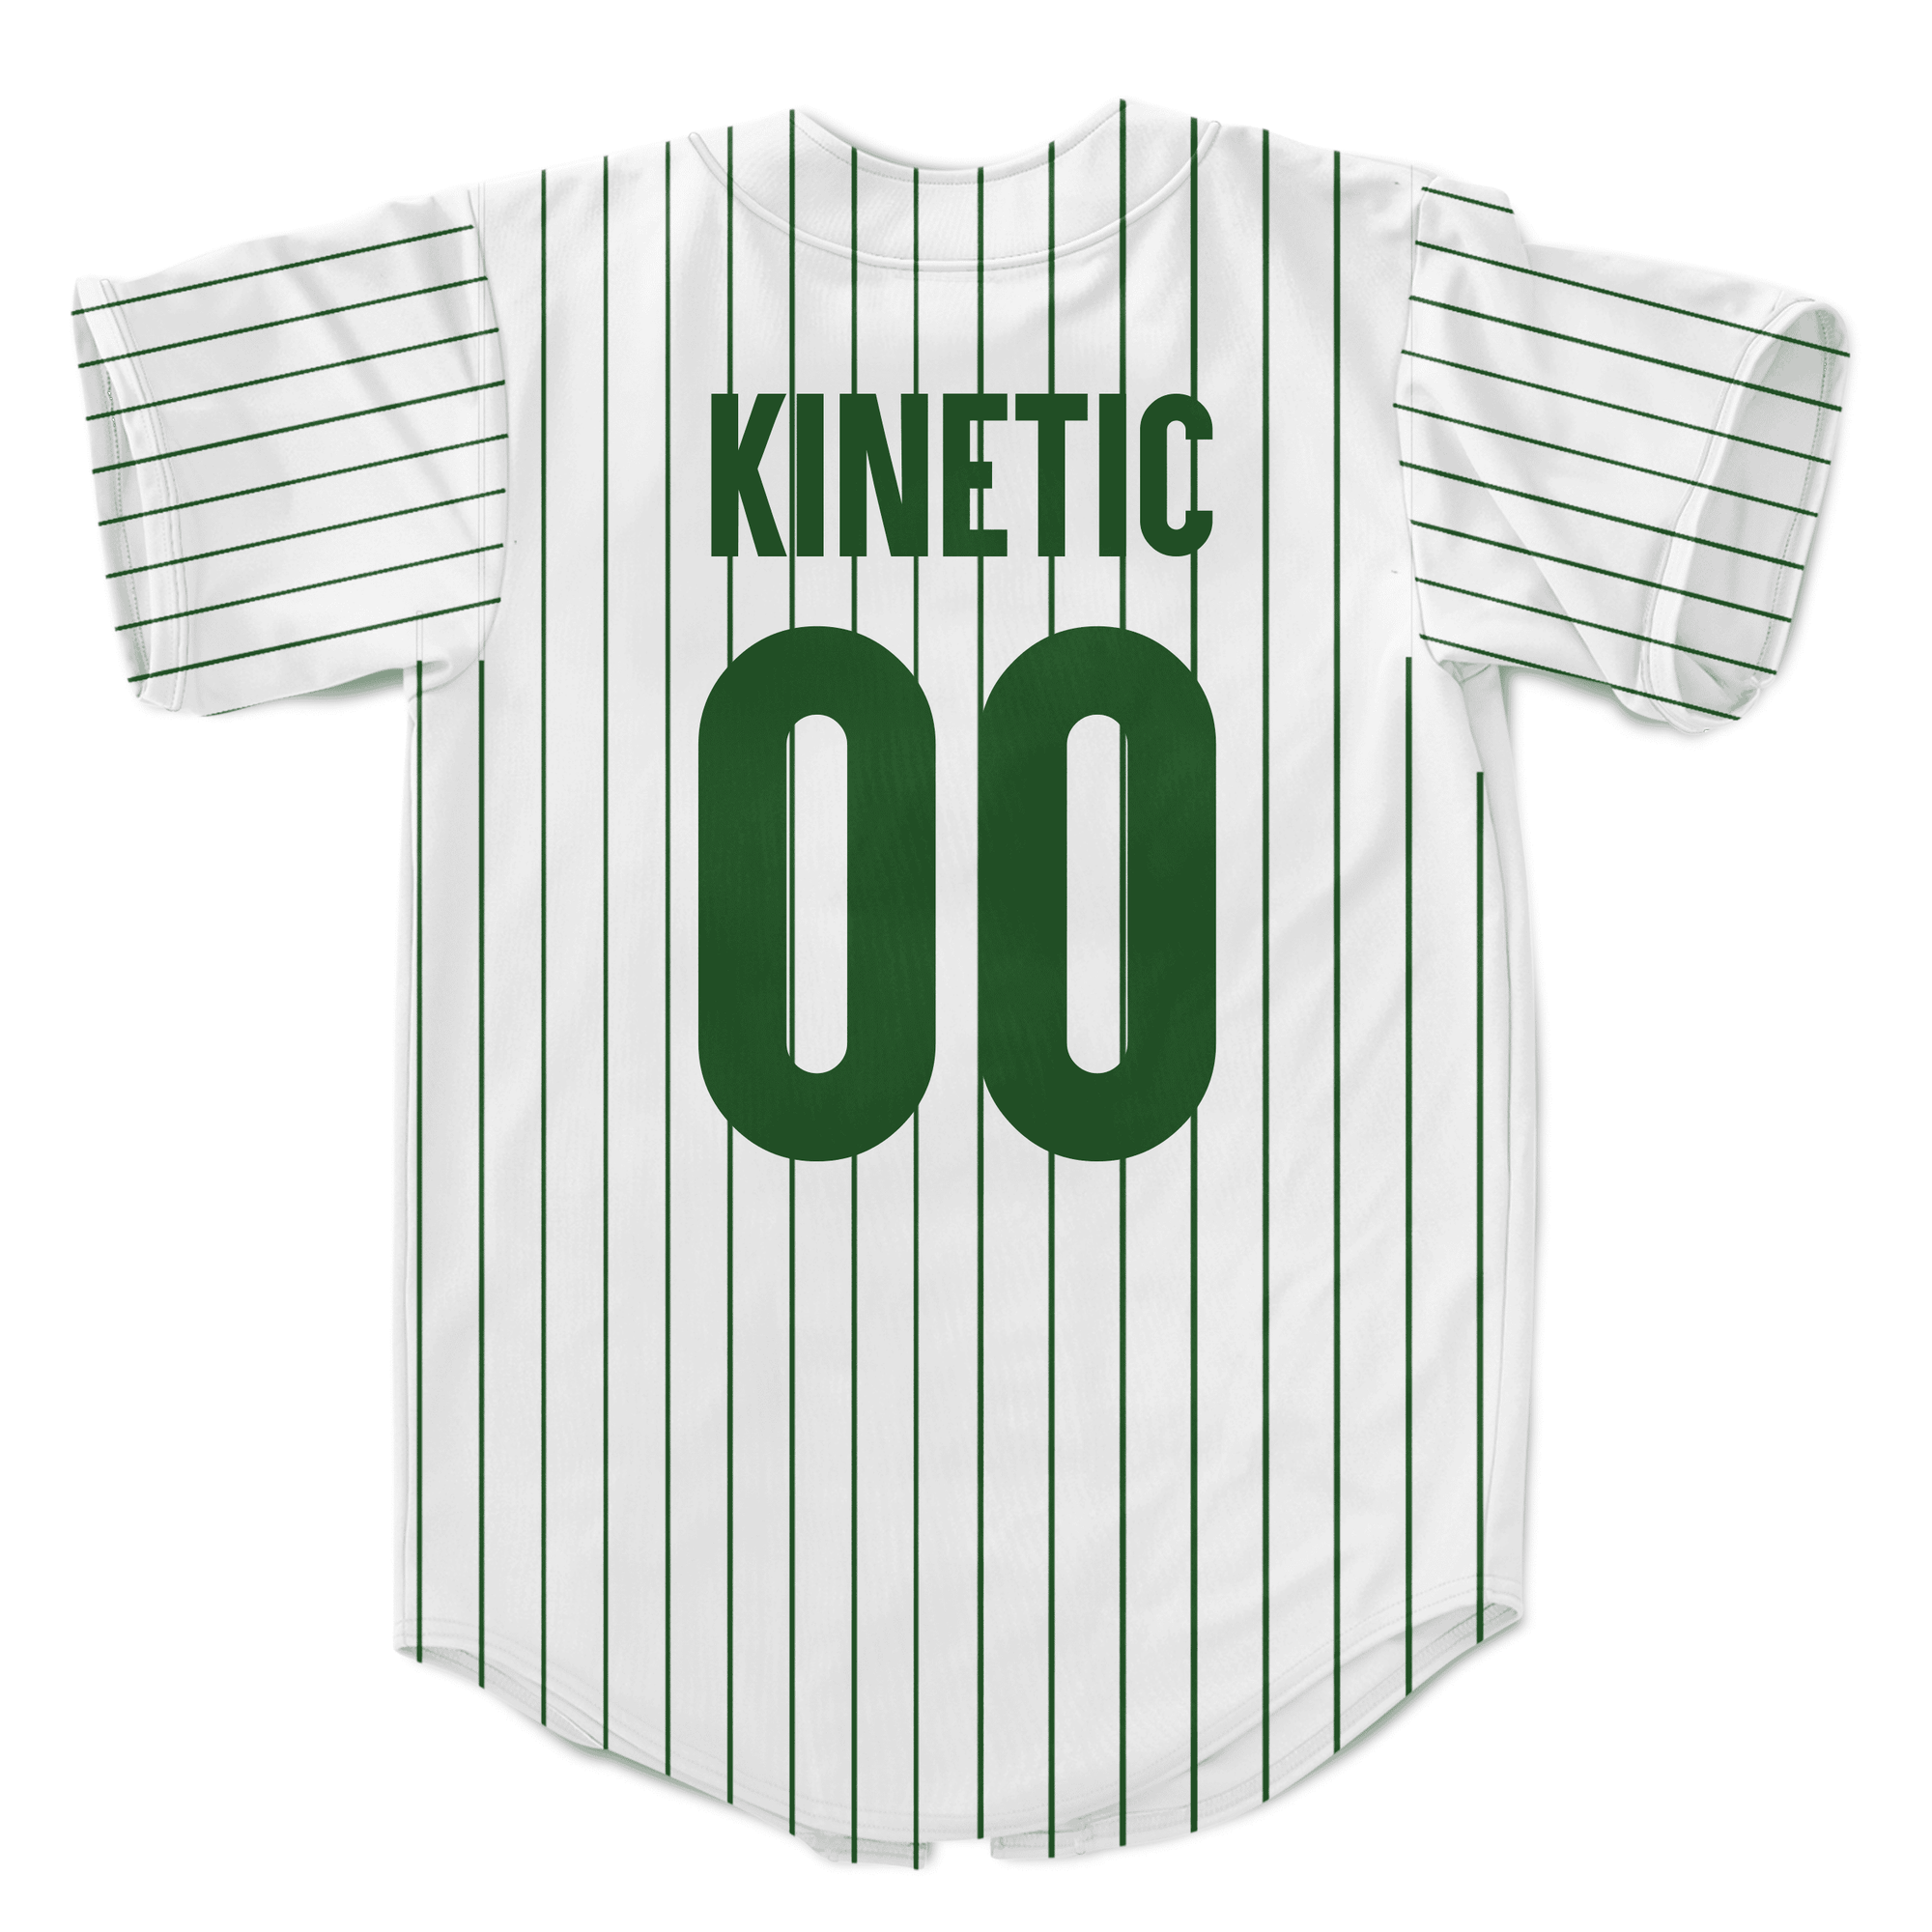 Sigma Alpha Mu - Green Pinstripe Baseball Jersey